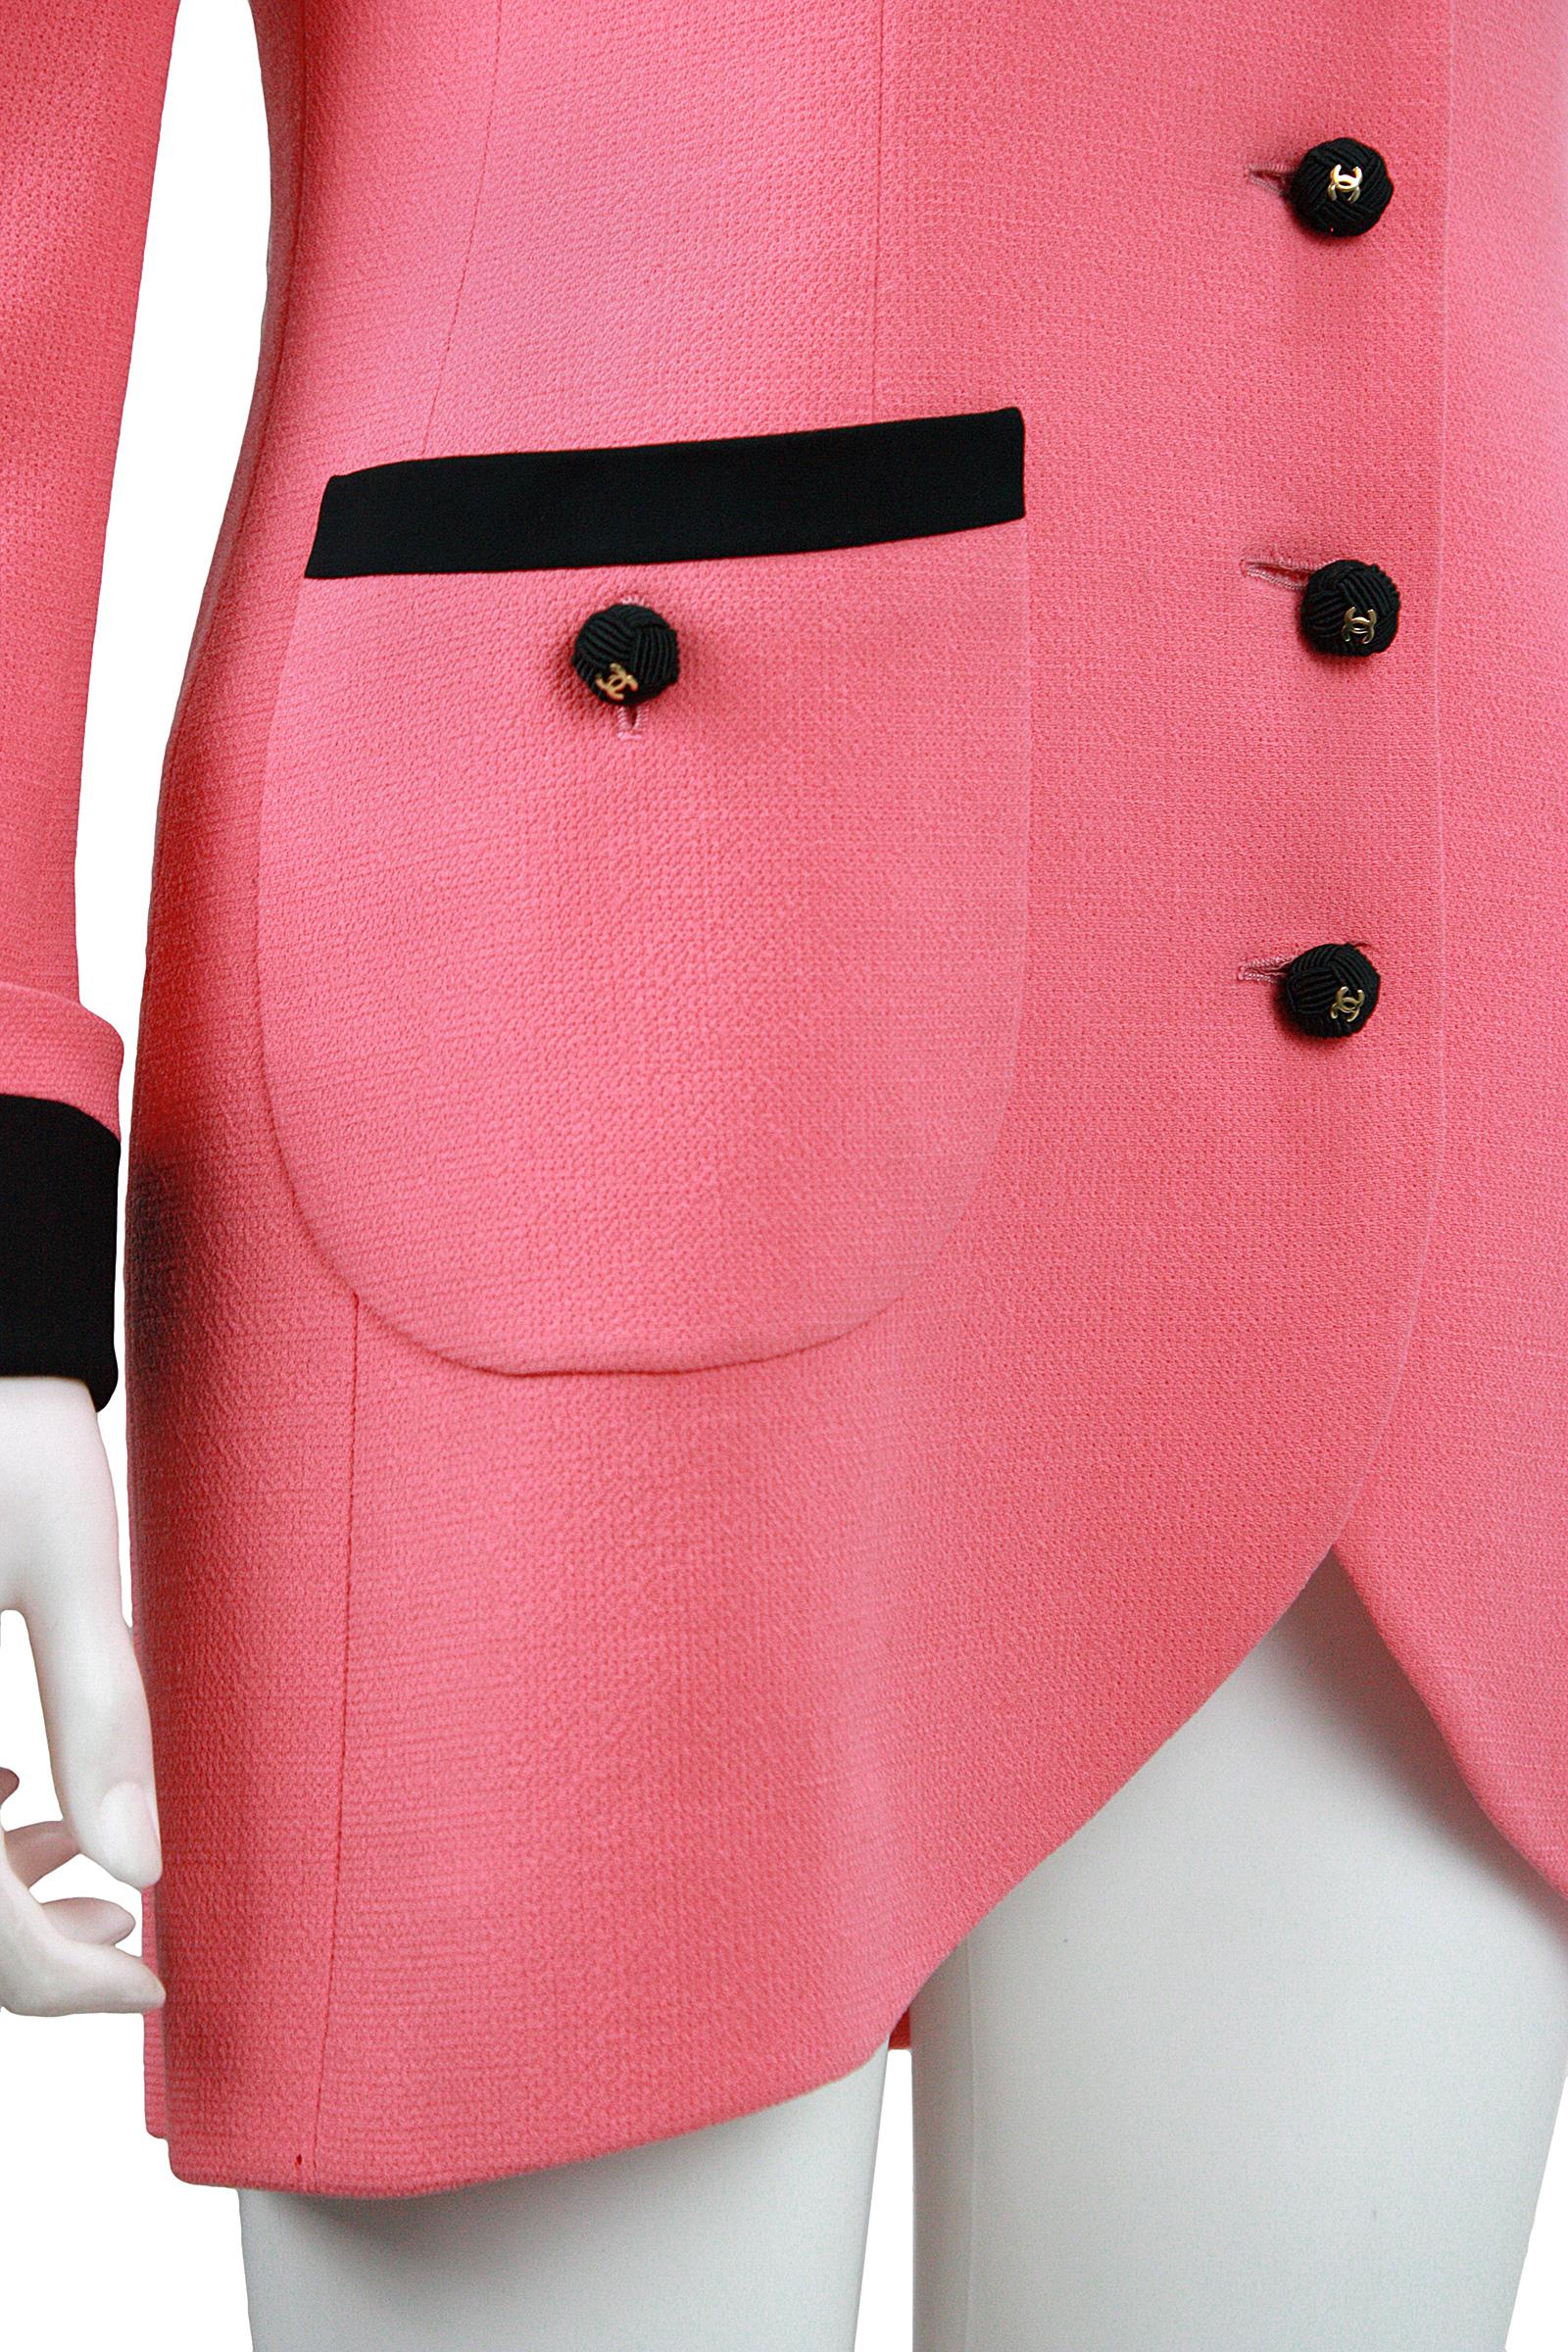 chanel pink gingham jacket